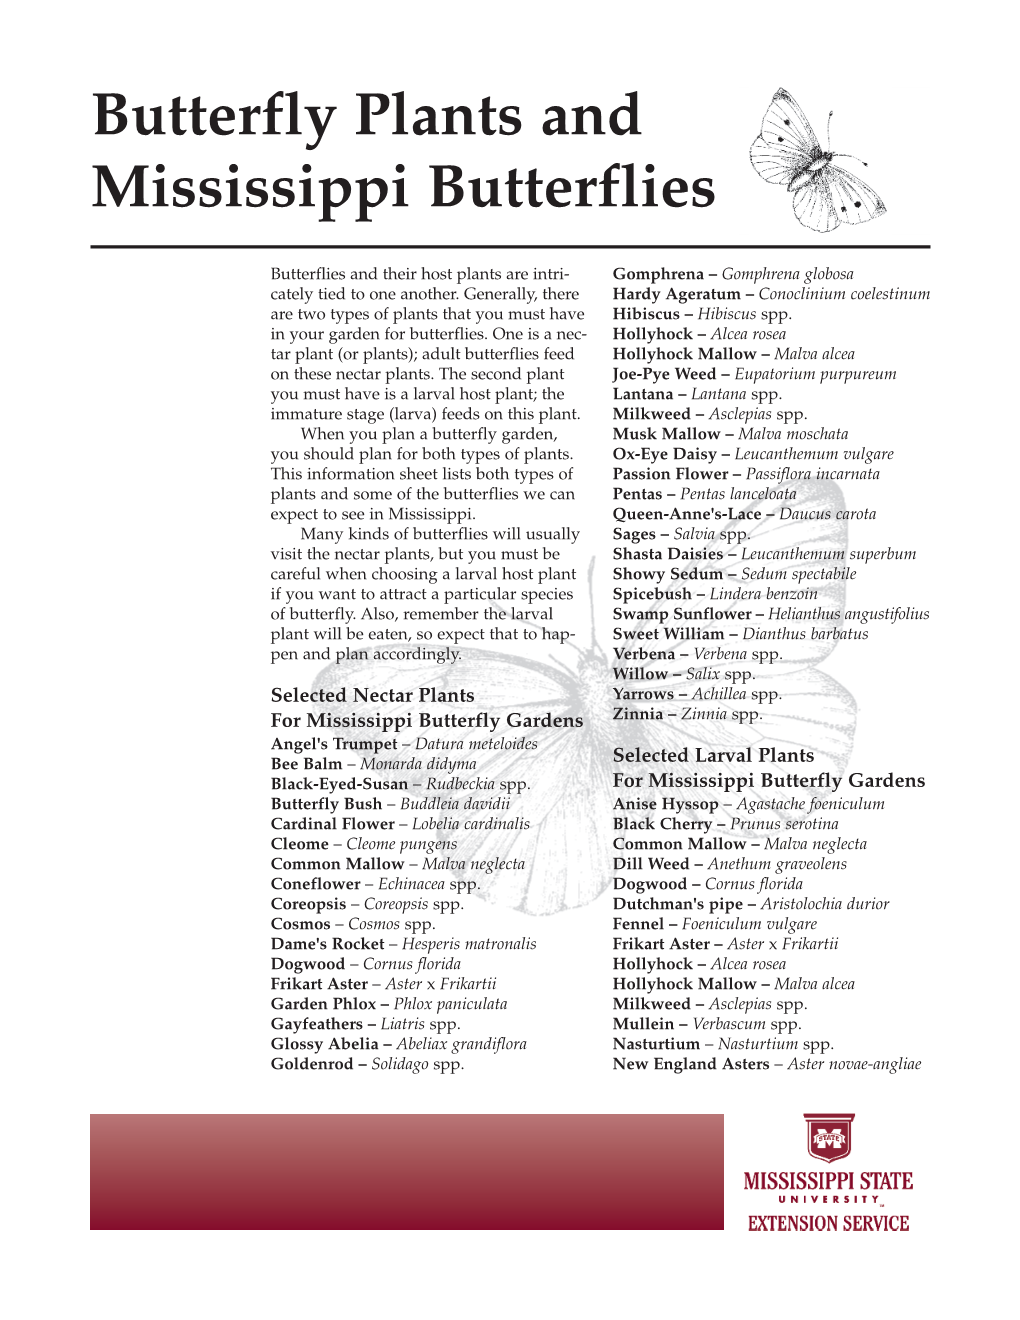 IS1661 Butterfly Plants & Mississippi Butterflies